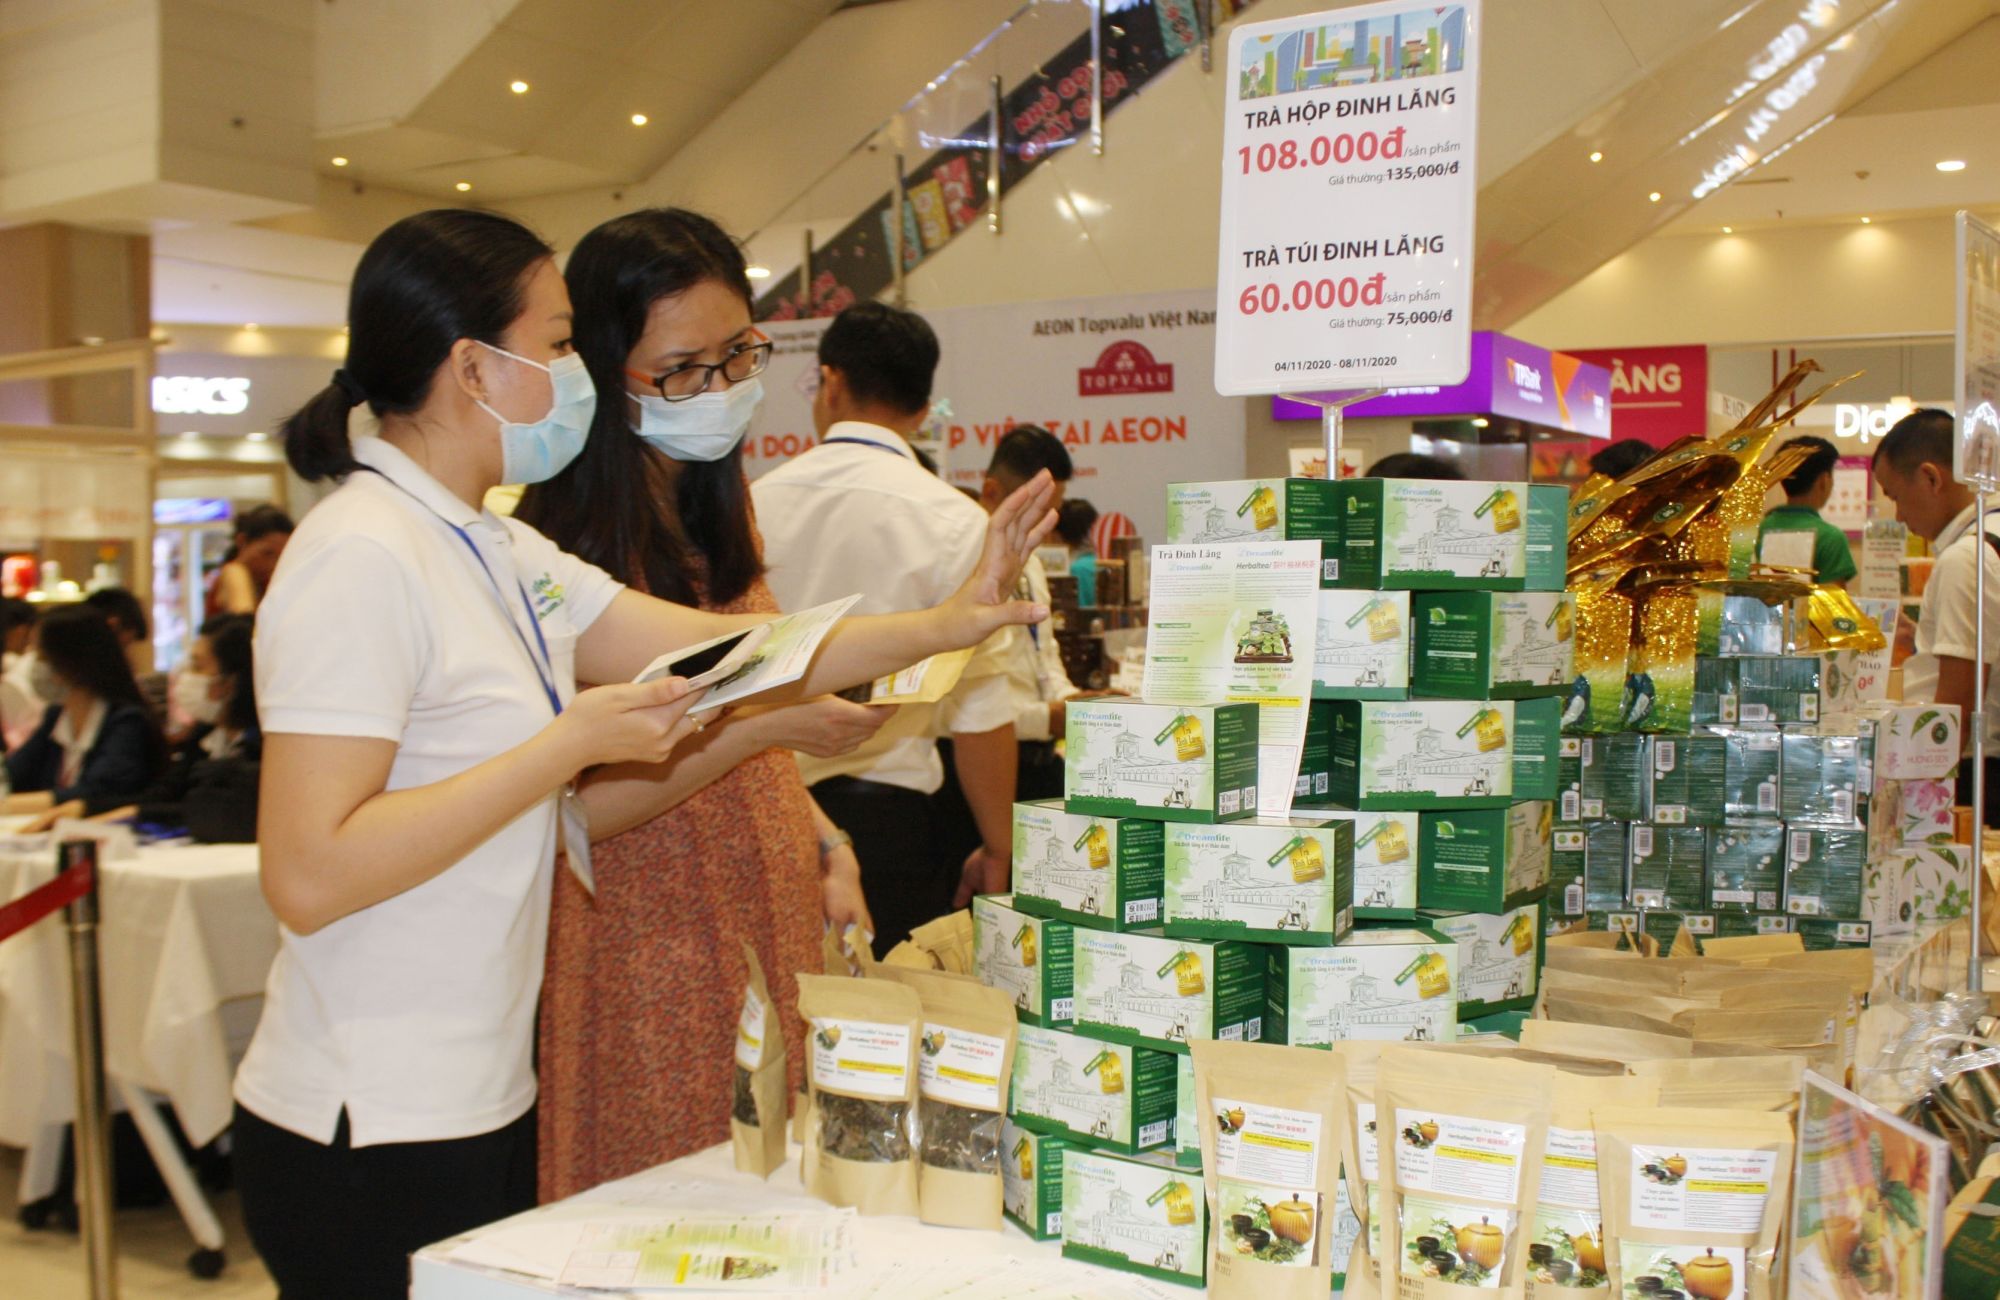 Вьетнамские предприятия представляют свою продукцию посетителям на “Неделе выставки товаров предприятий Вьетнама” в Хошимине (Фото: Суан Ань/ВИА)